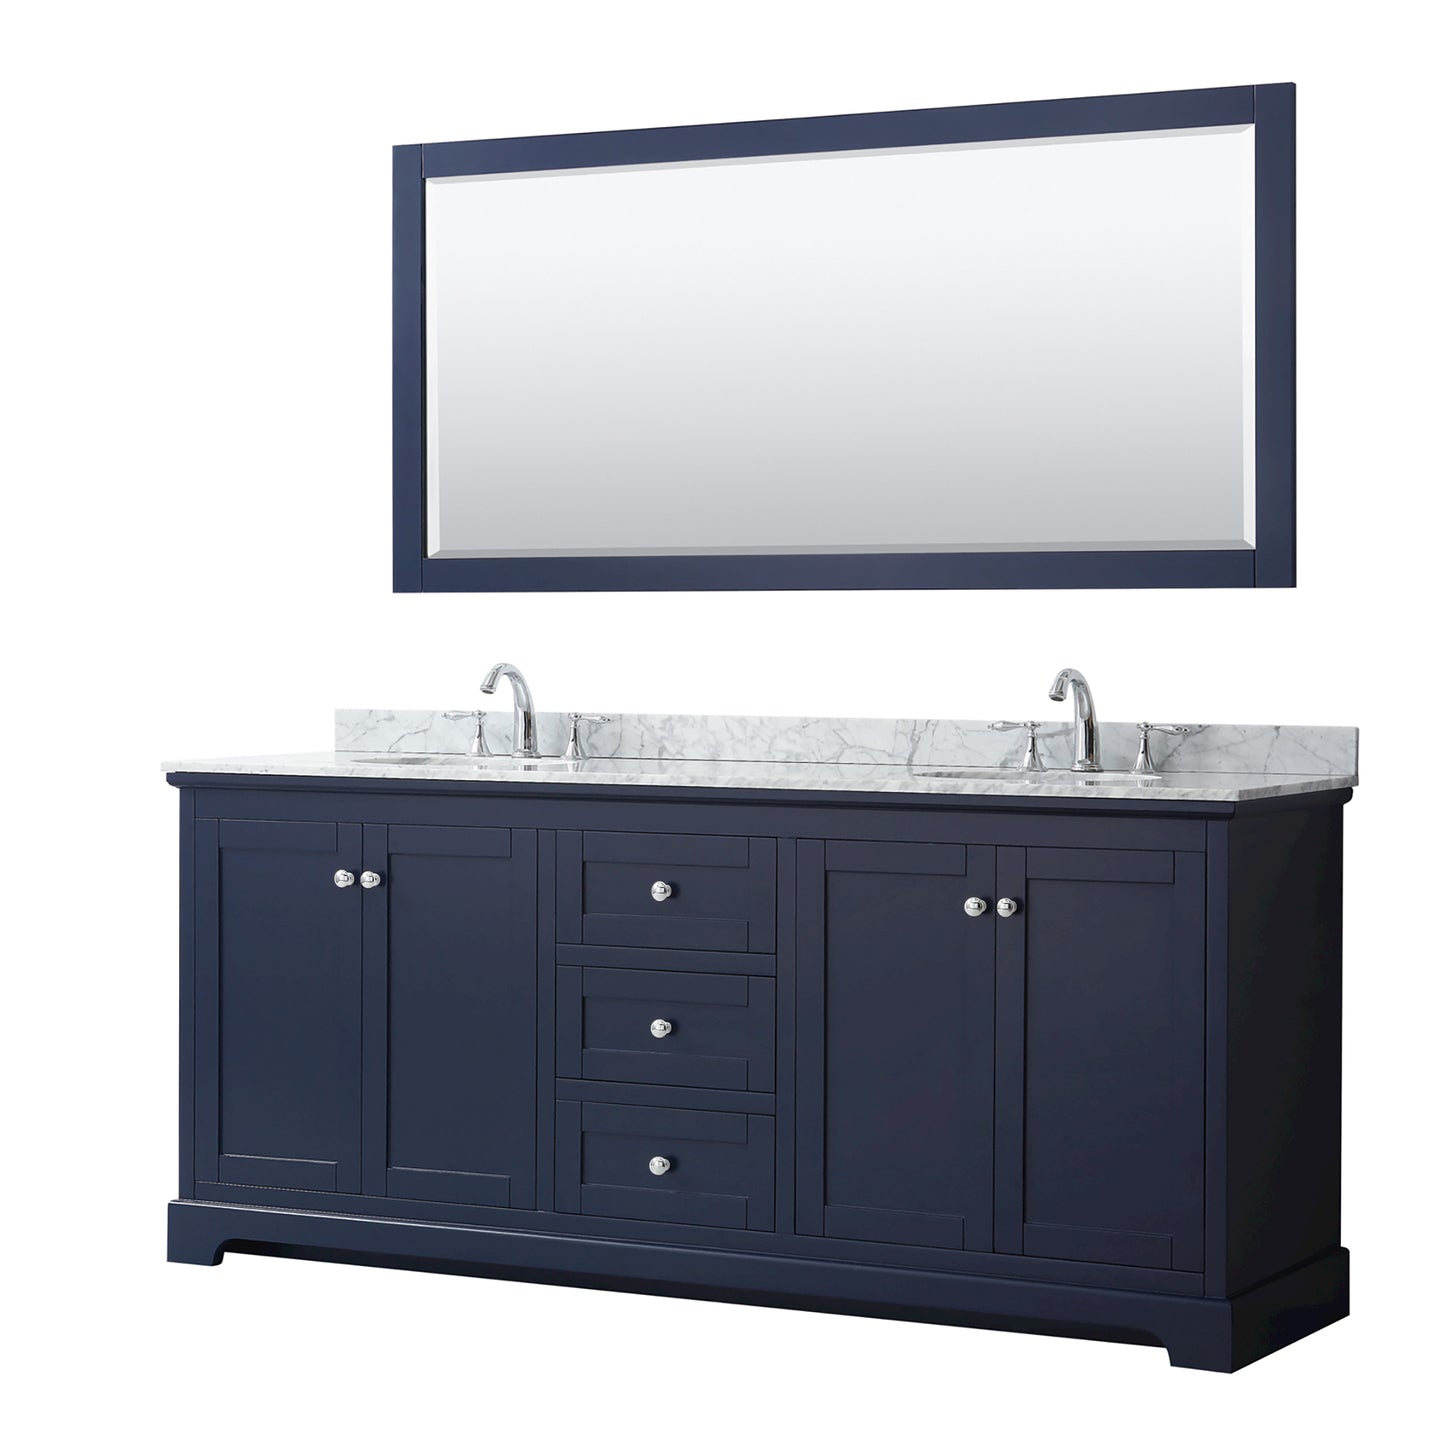 Wyndham Avery 80 Inch Double Bathroom Vanity in Dark Blue, White Carrara Marble Countertop, Undermount Sinks, Polished Chrome Trim - Luxe Bathroom Vanities